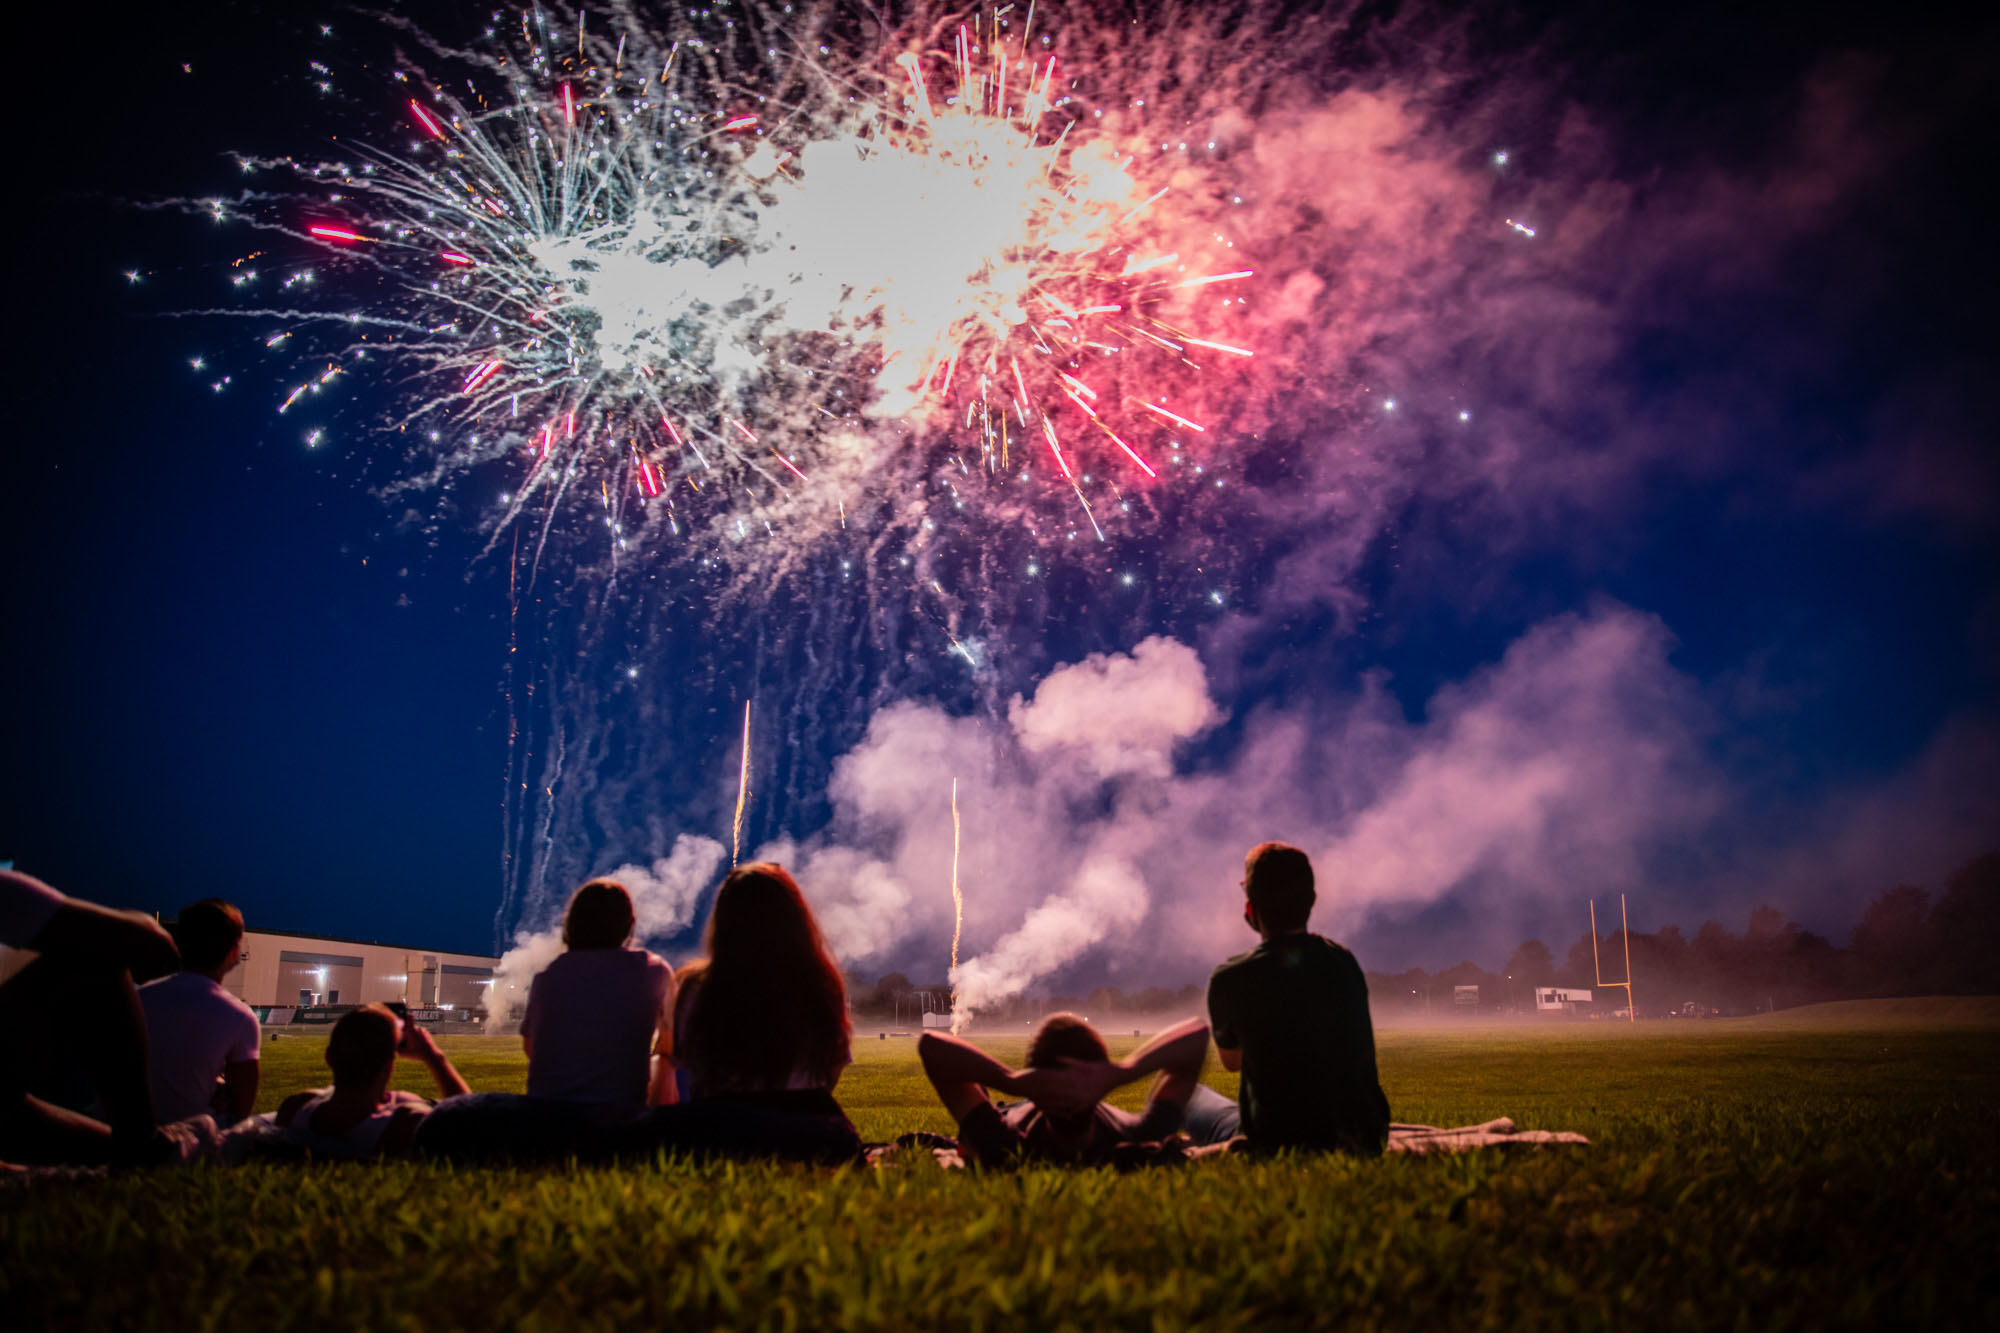 Northwest students enjoyed fireworks to celebrate the start of the academic year in August. (Photo by Brandon Bland/Northwest Missouri State University)